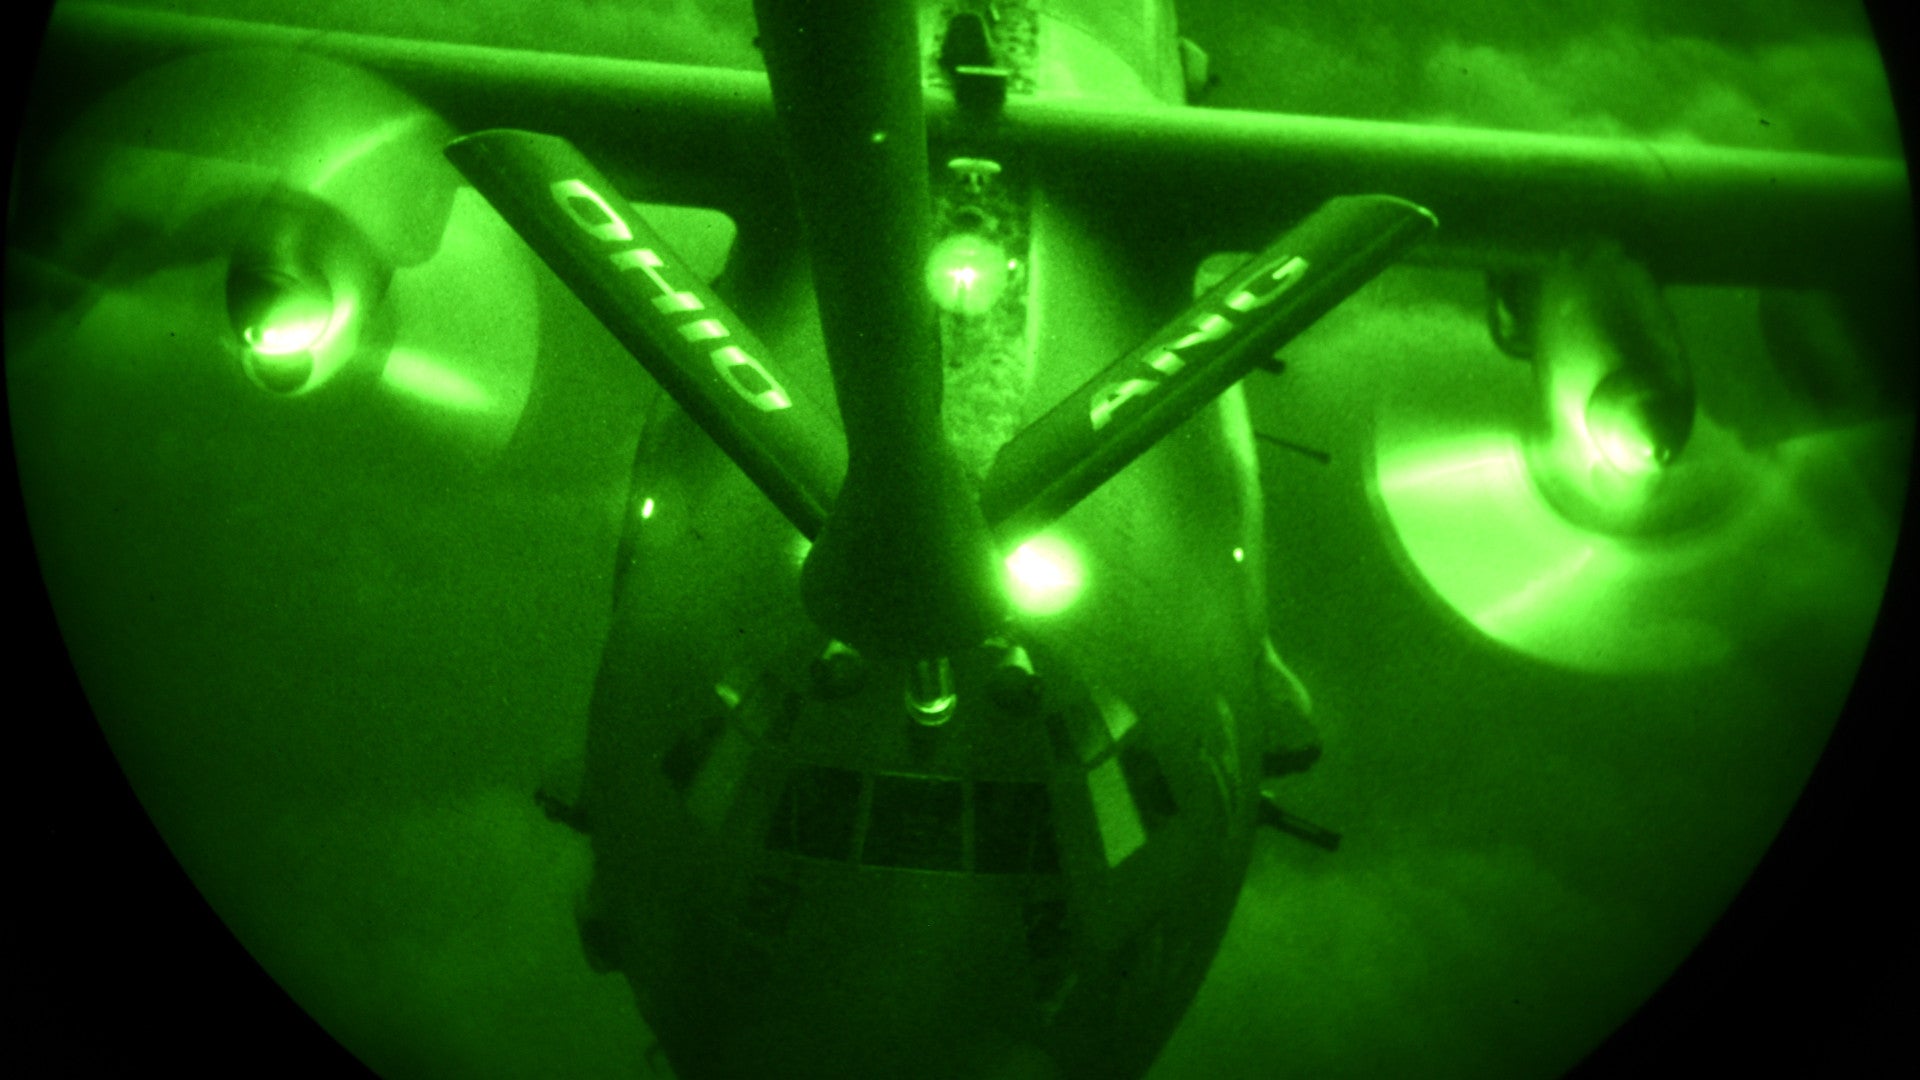 American General Says ‘Adversaries’ Are Jamming AC-130 Gunships in Syria